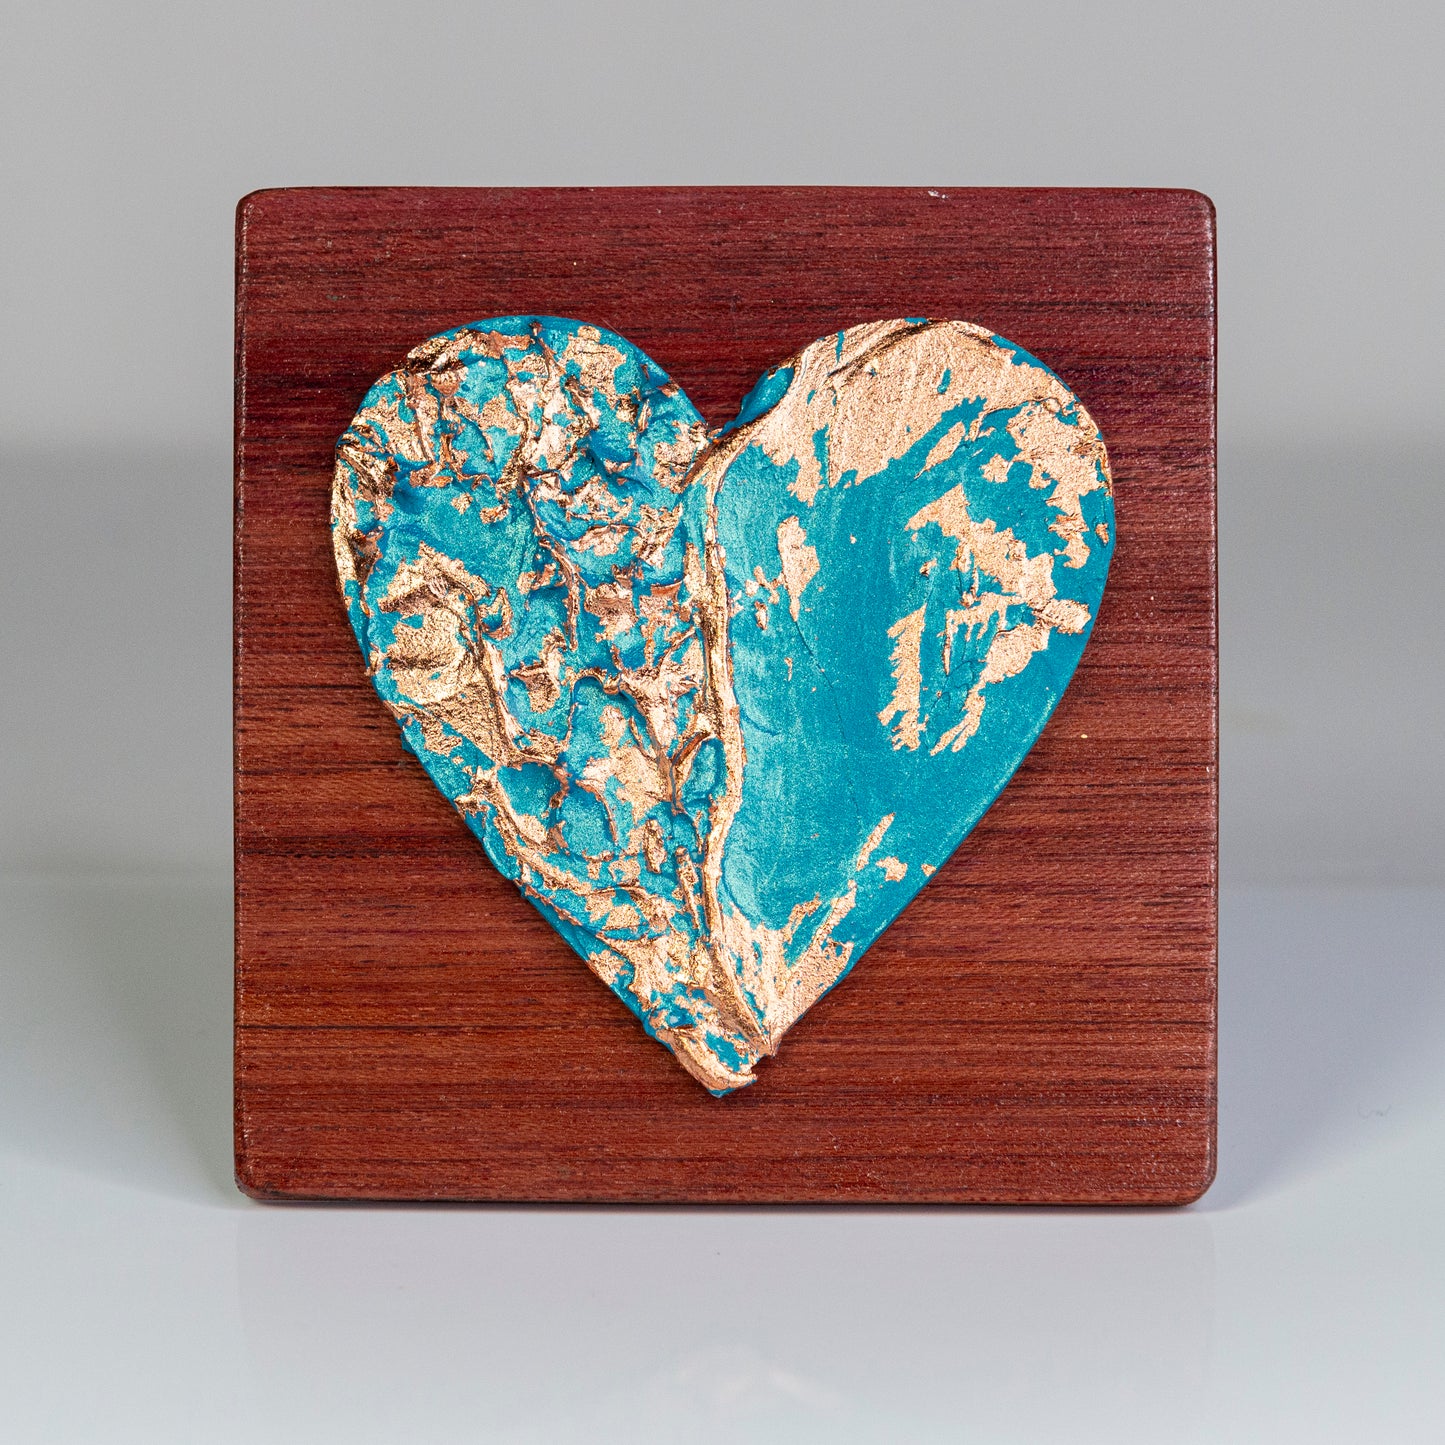 Metal art heart on wood